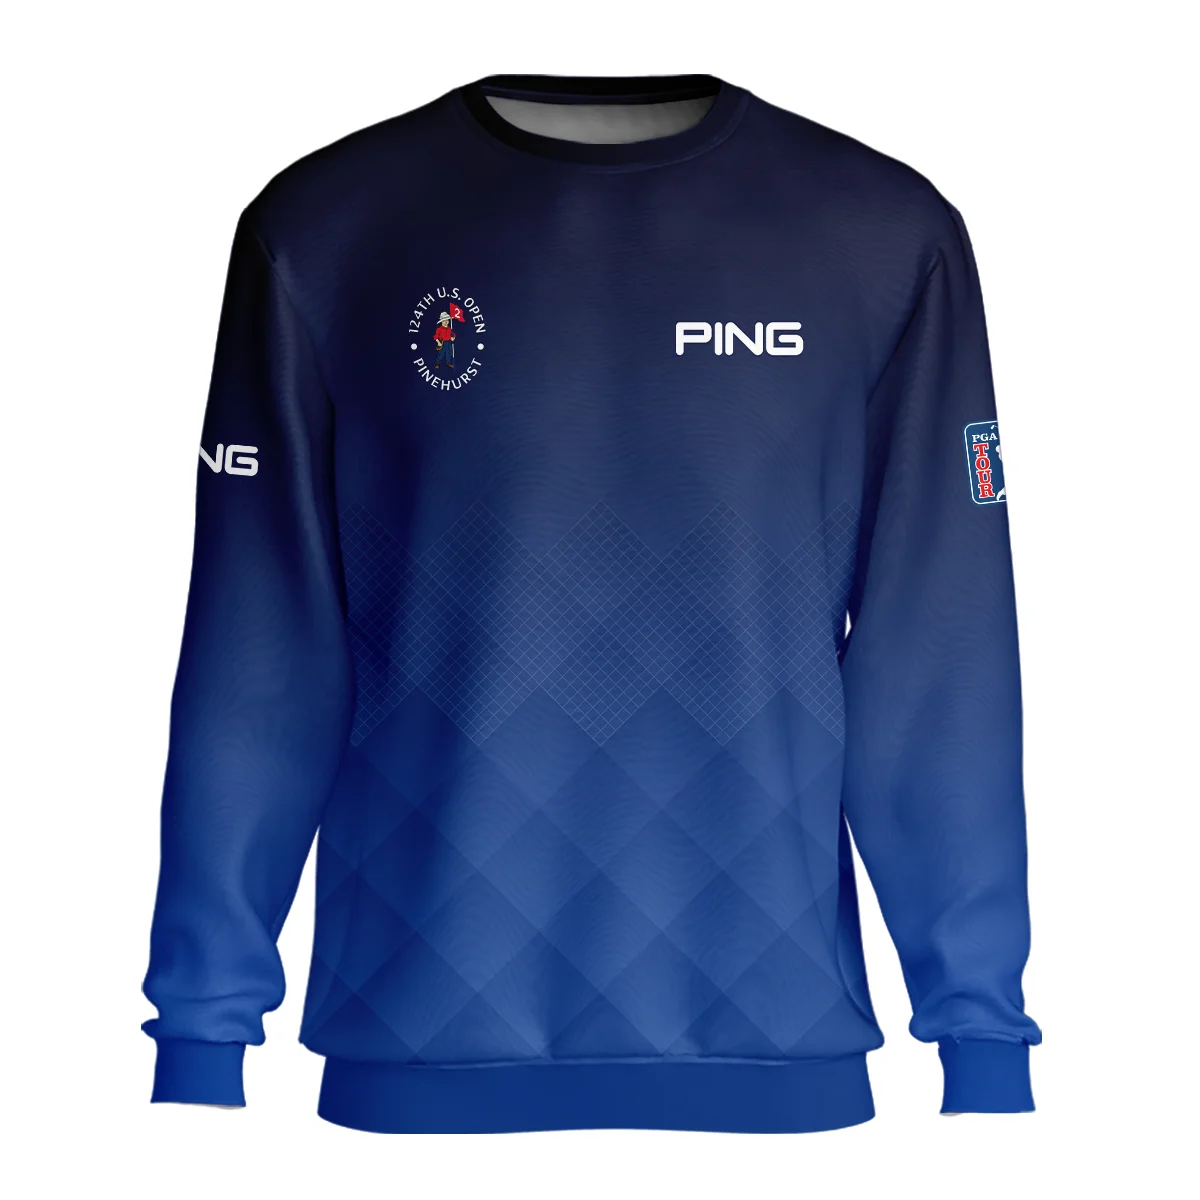 124th U.S. Open Pinehurst Ping Dark Blue Gradient Stripes Pattern Unisex Sweatshirt Style Classic Sweatshirt